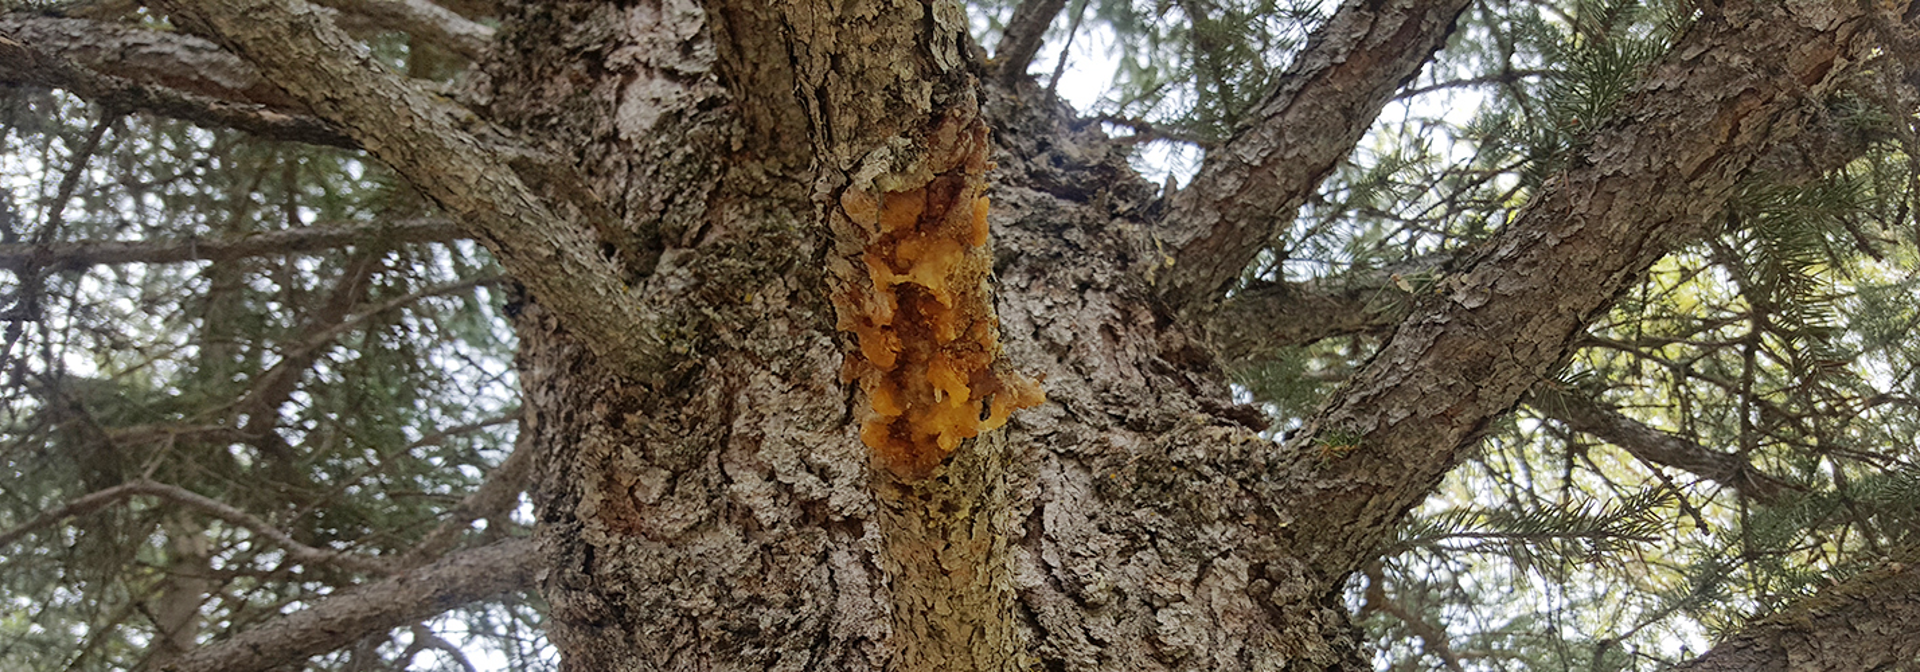 Cytospora Canker Of Spruce Arborist Advice Banner 002